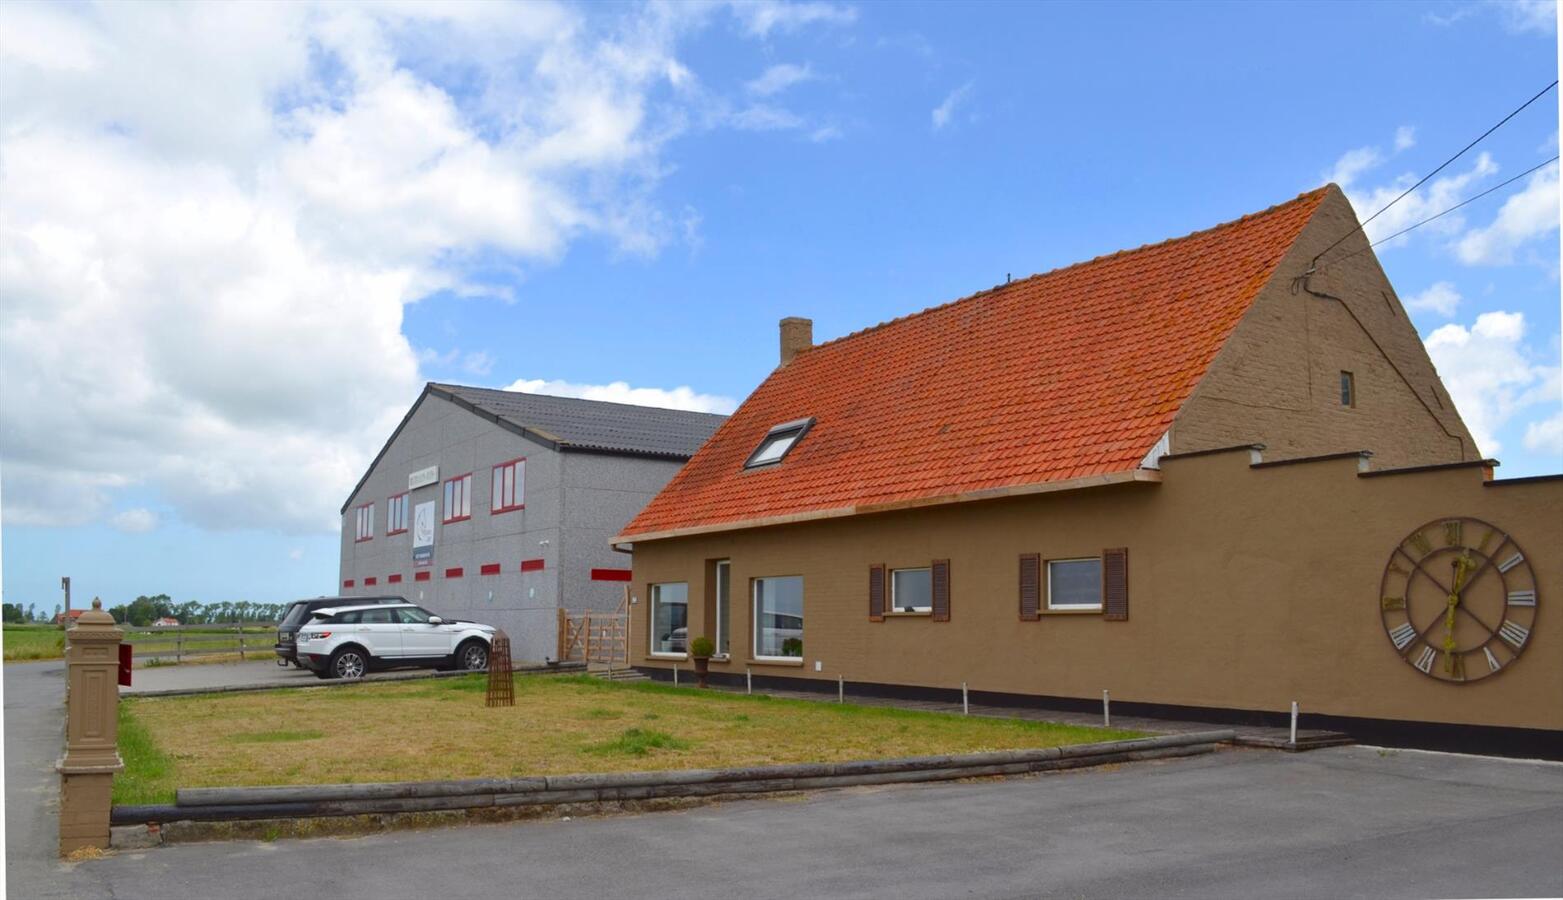 Property sold in Diksmuide